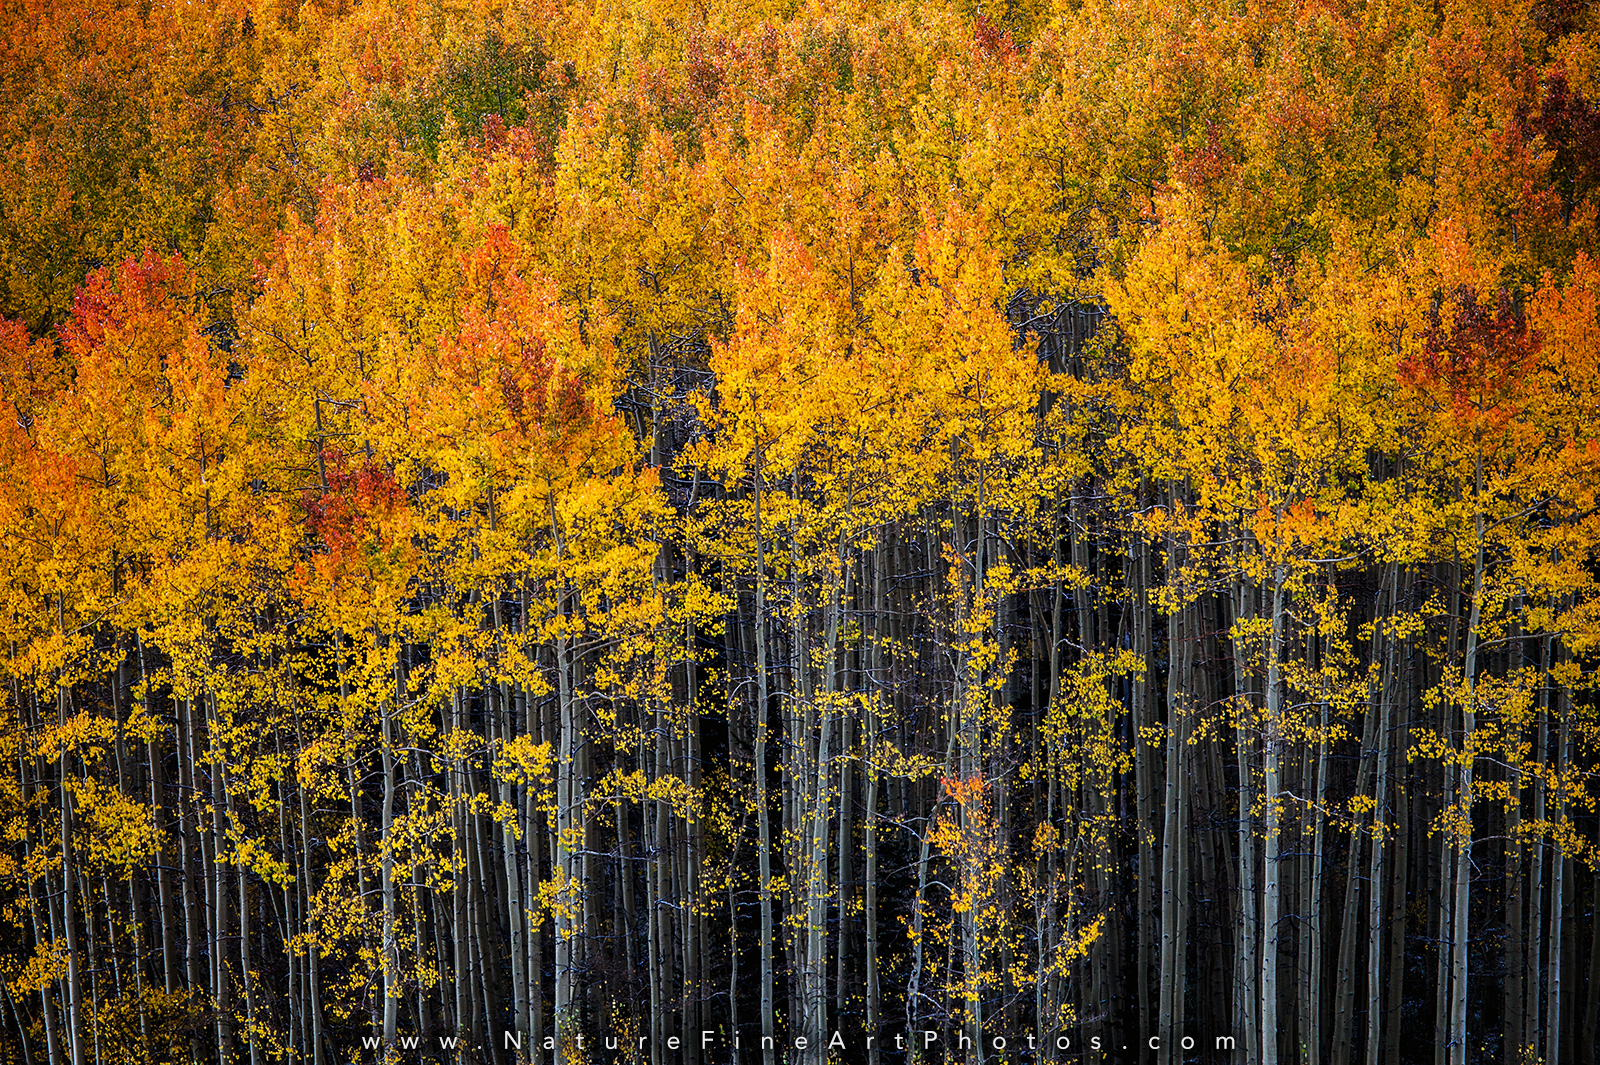 Fall Foliage Photo of Aspen Trees